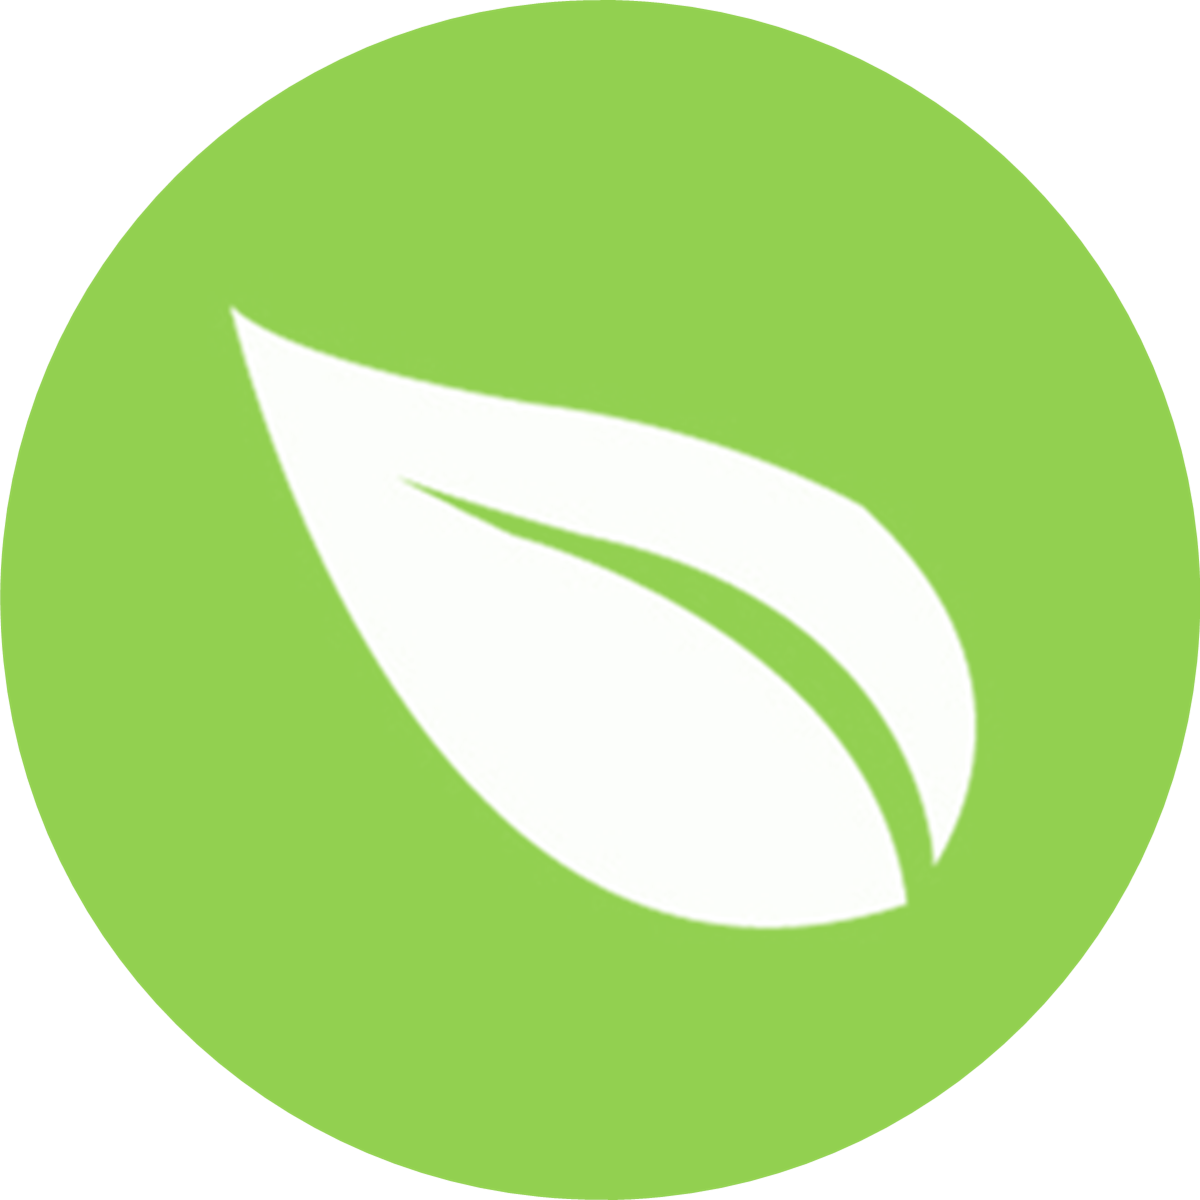 Buy Organic - Green Waste Icon (1200x1200)